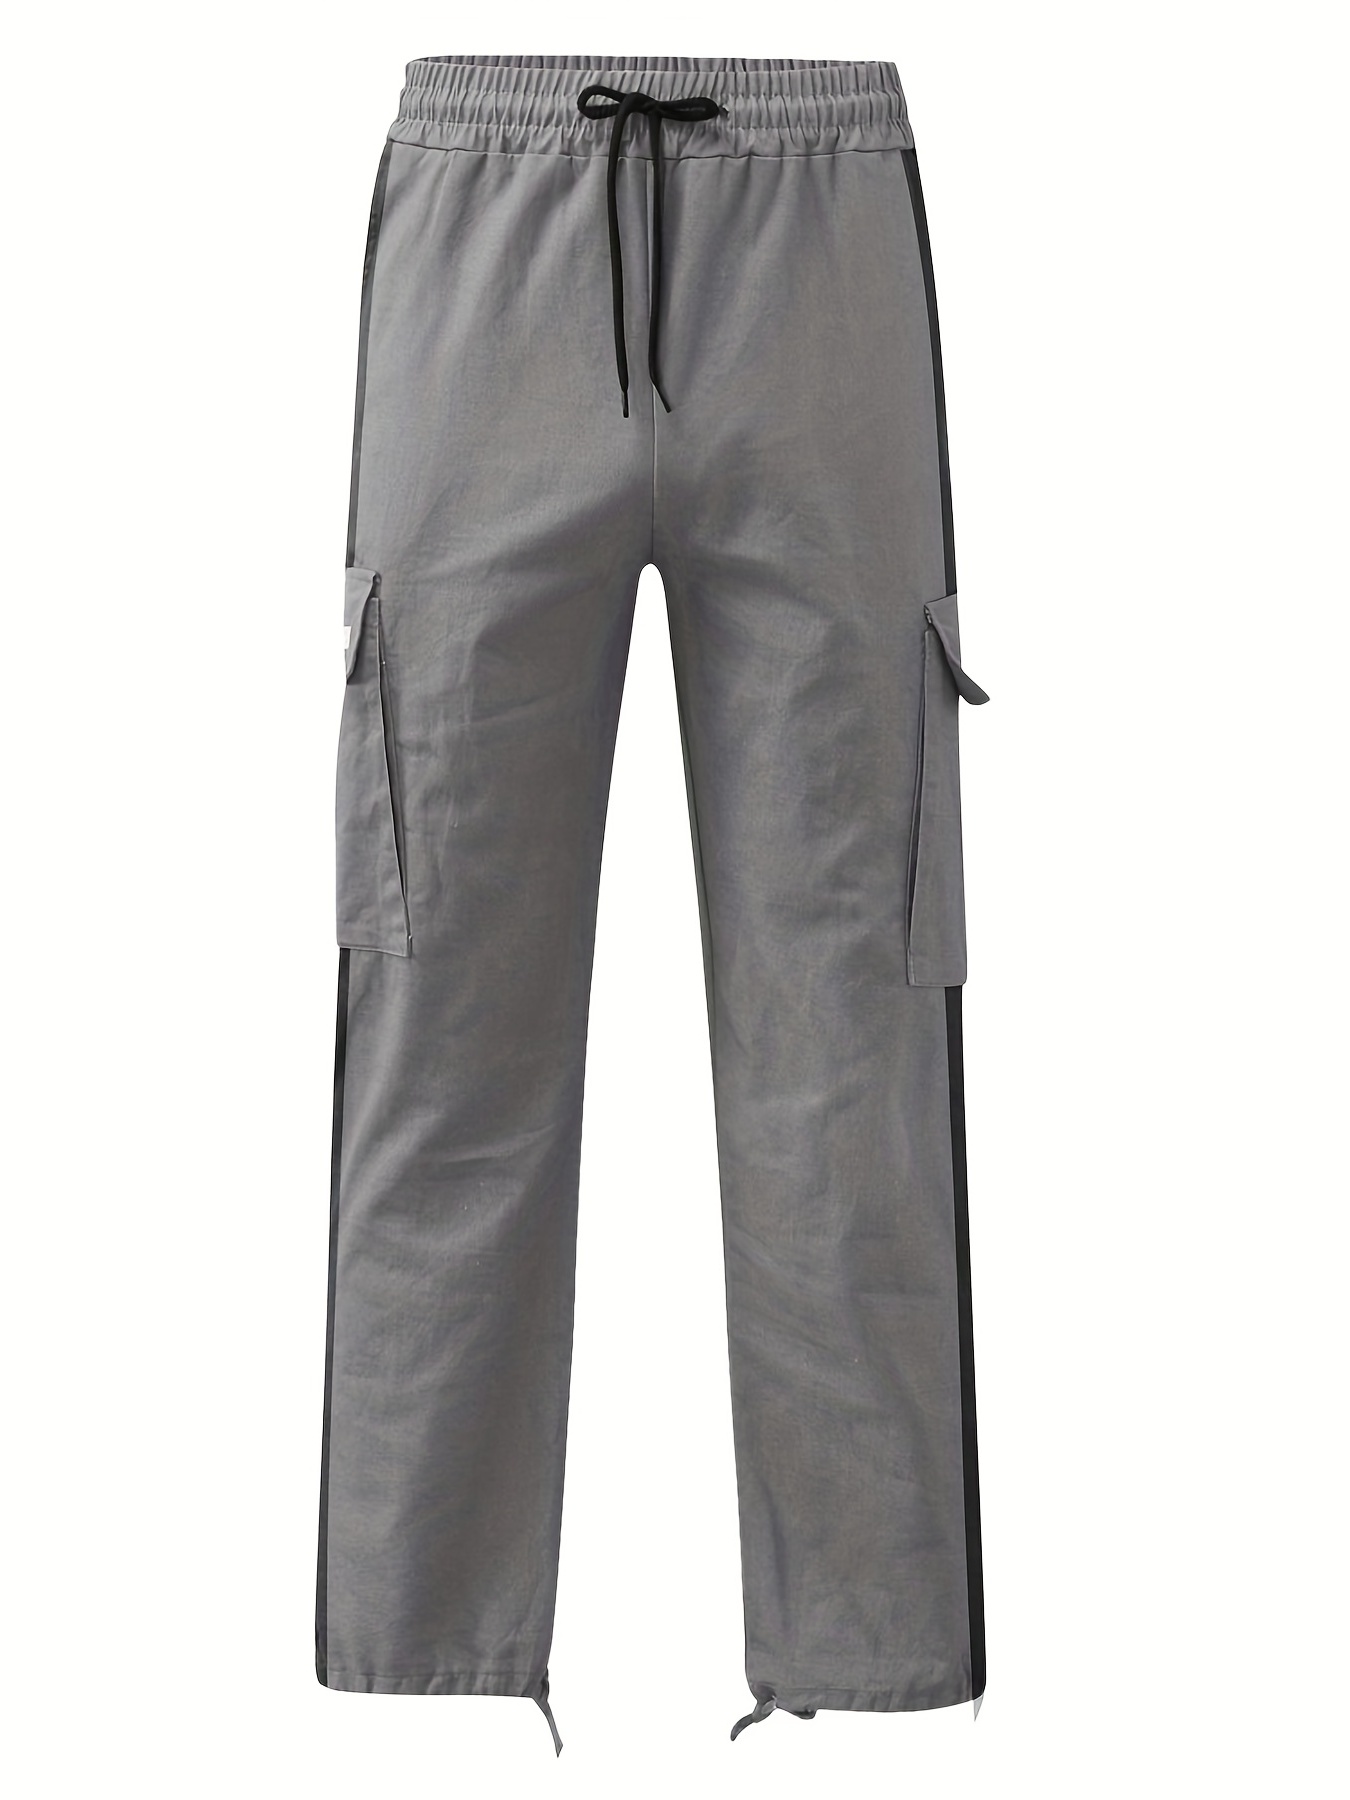 Cargo Pants for Men Relaxed Fit Lightweight Stretch Waist Cargo